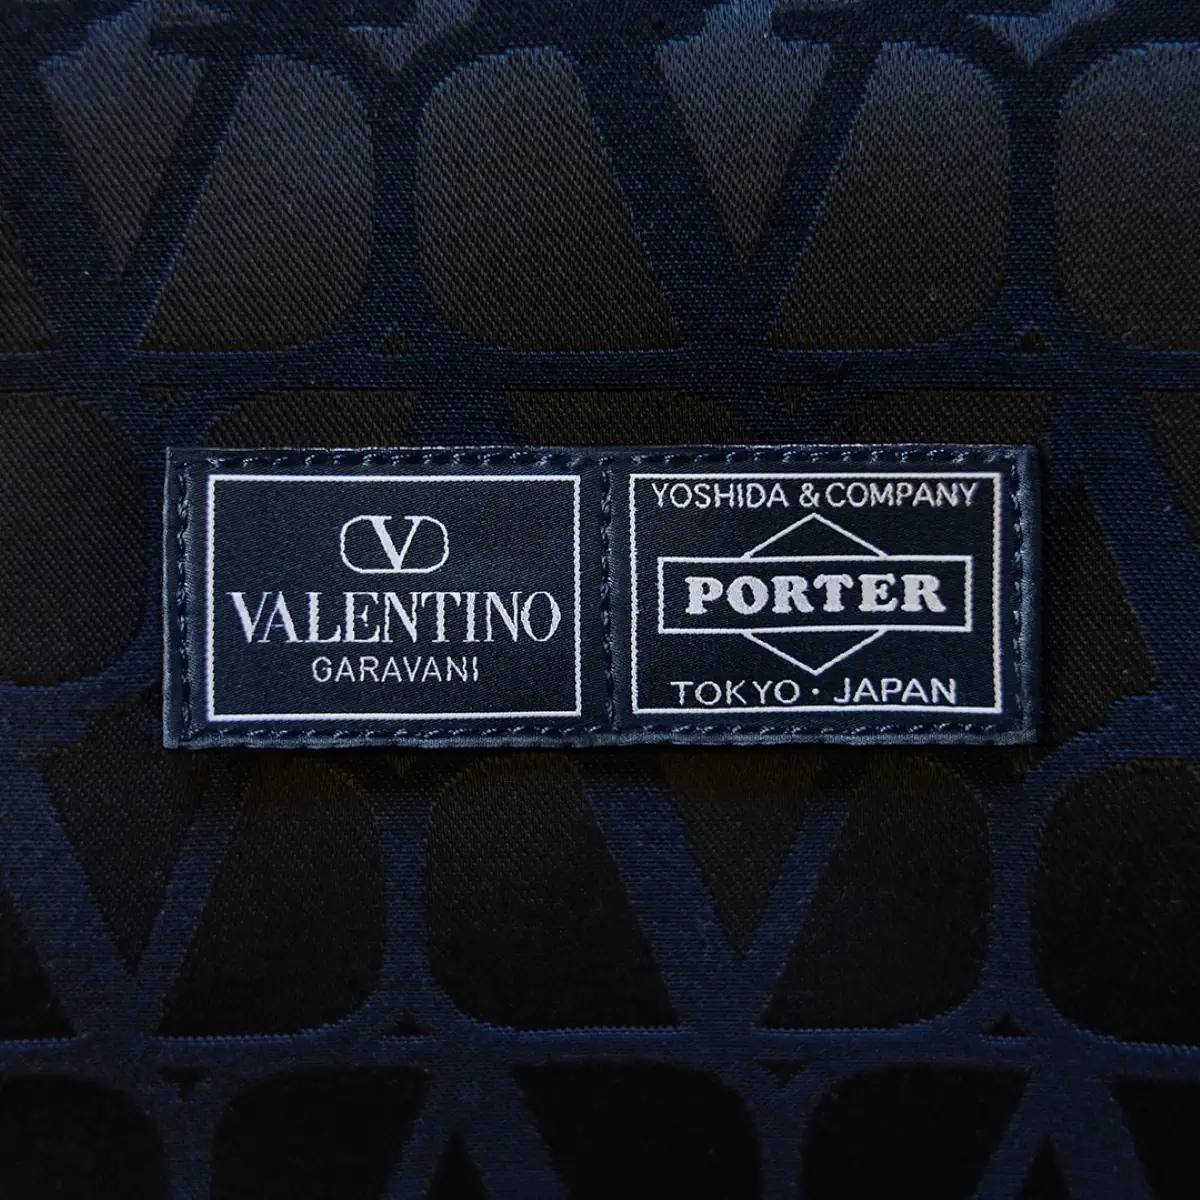 Valentino Garavani and Porter unveil a fusion of high fashion and craftsmanship